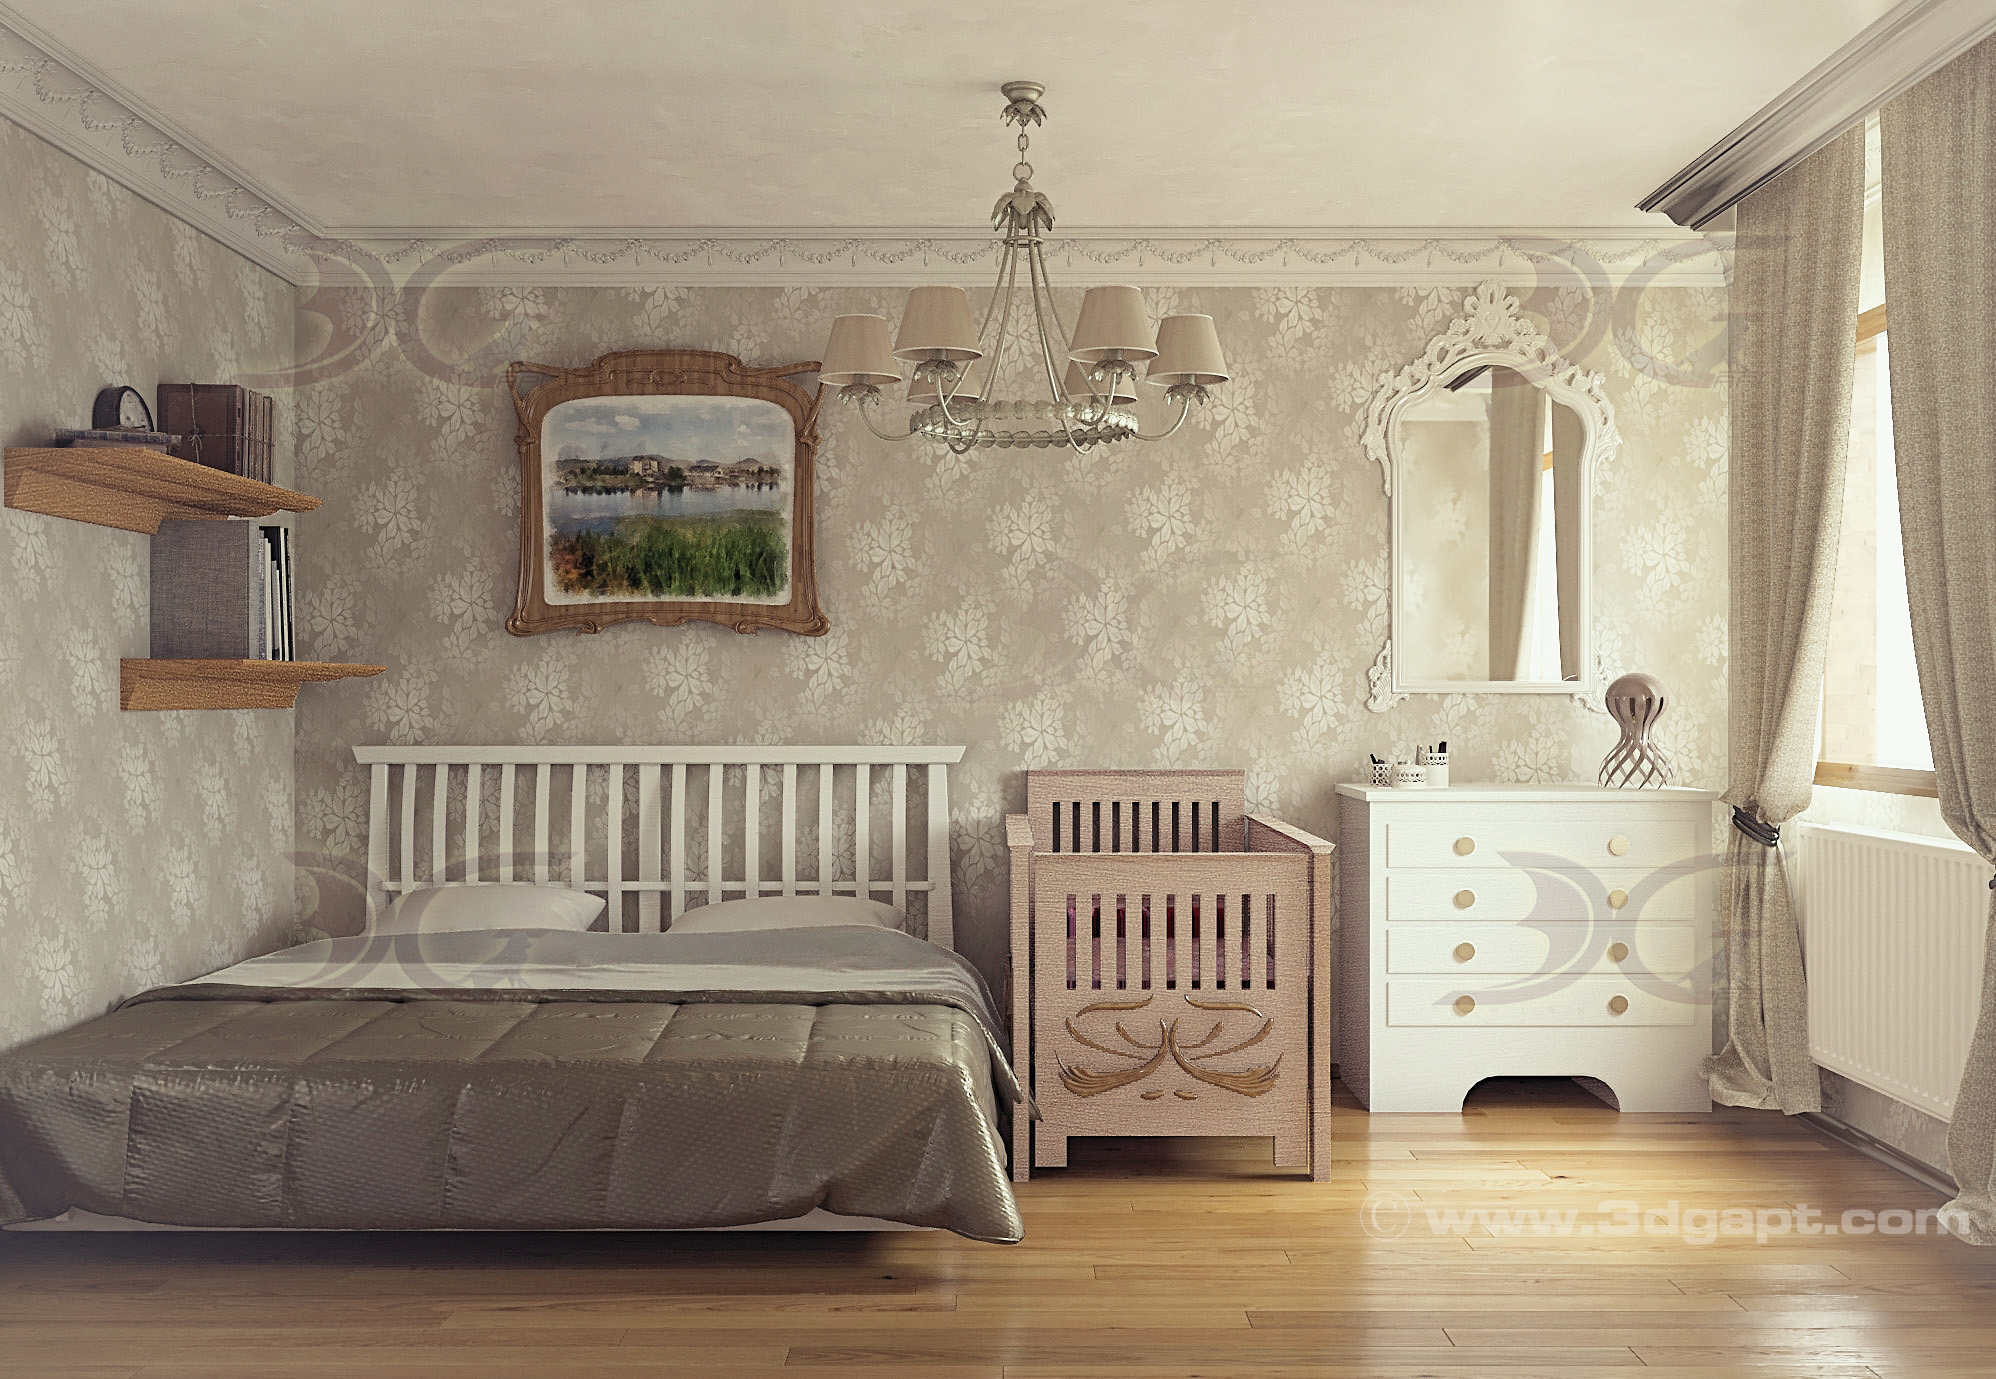 architecture interiors simple bedroom001